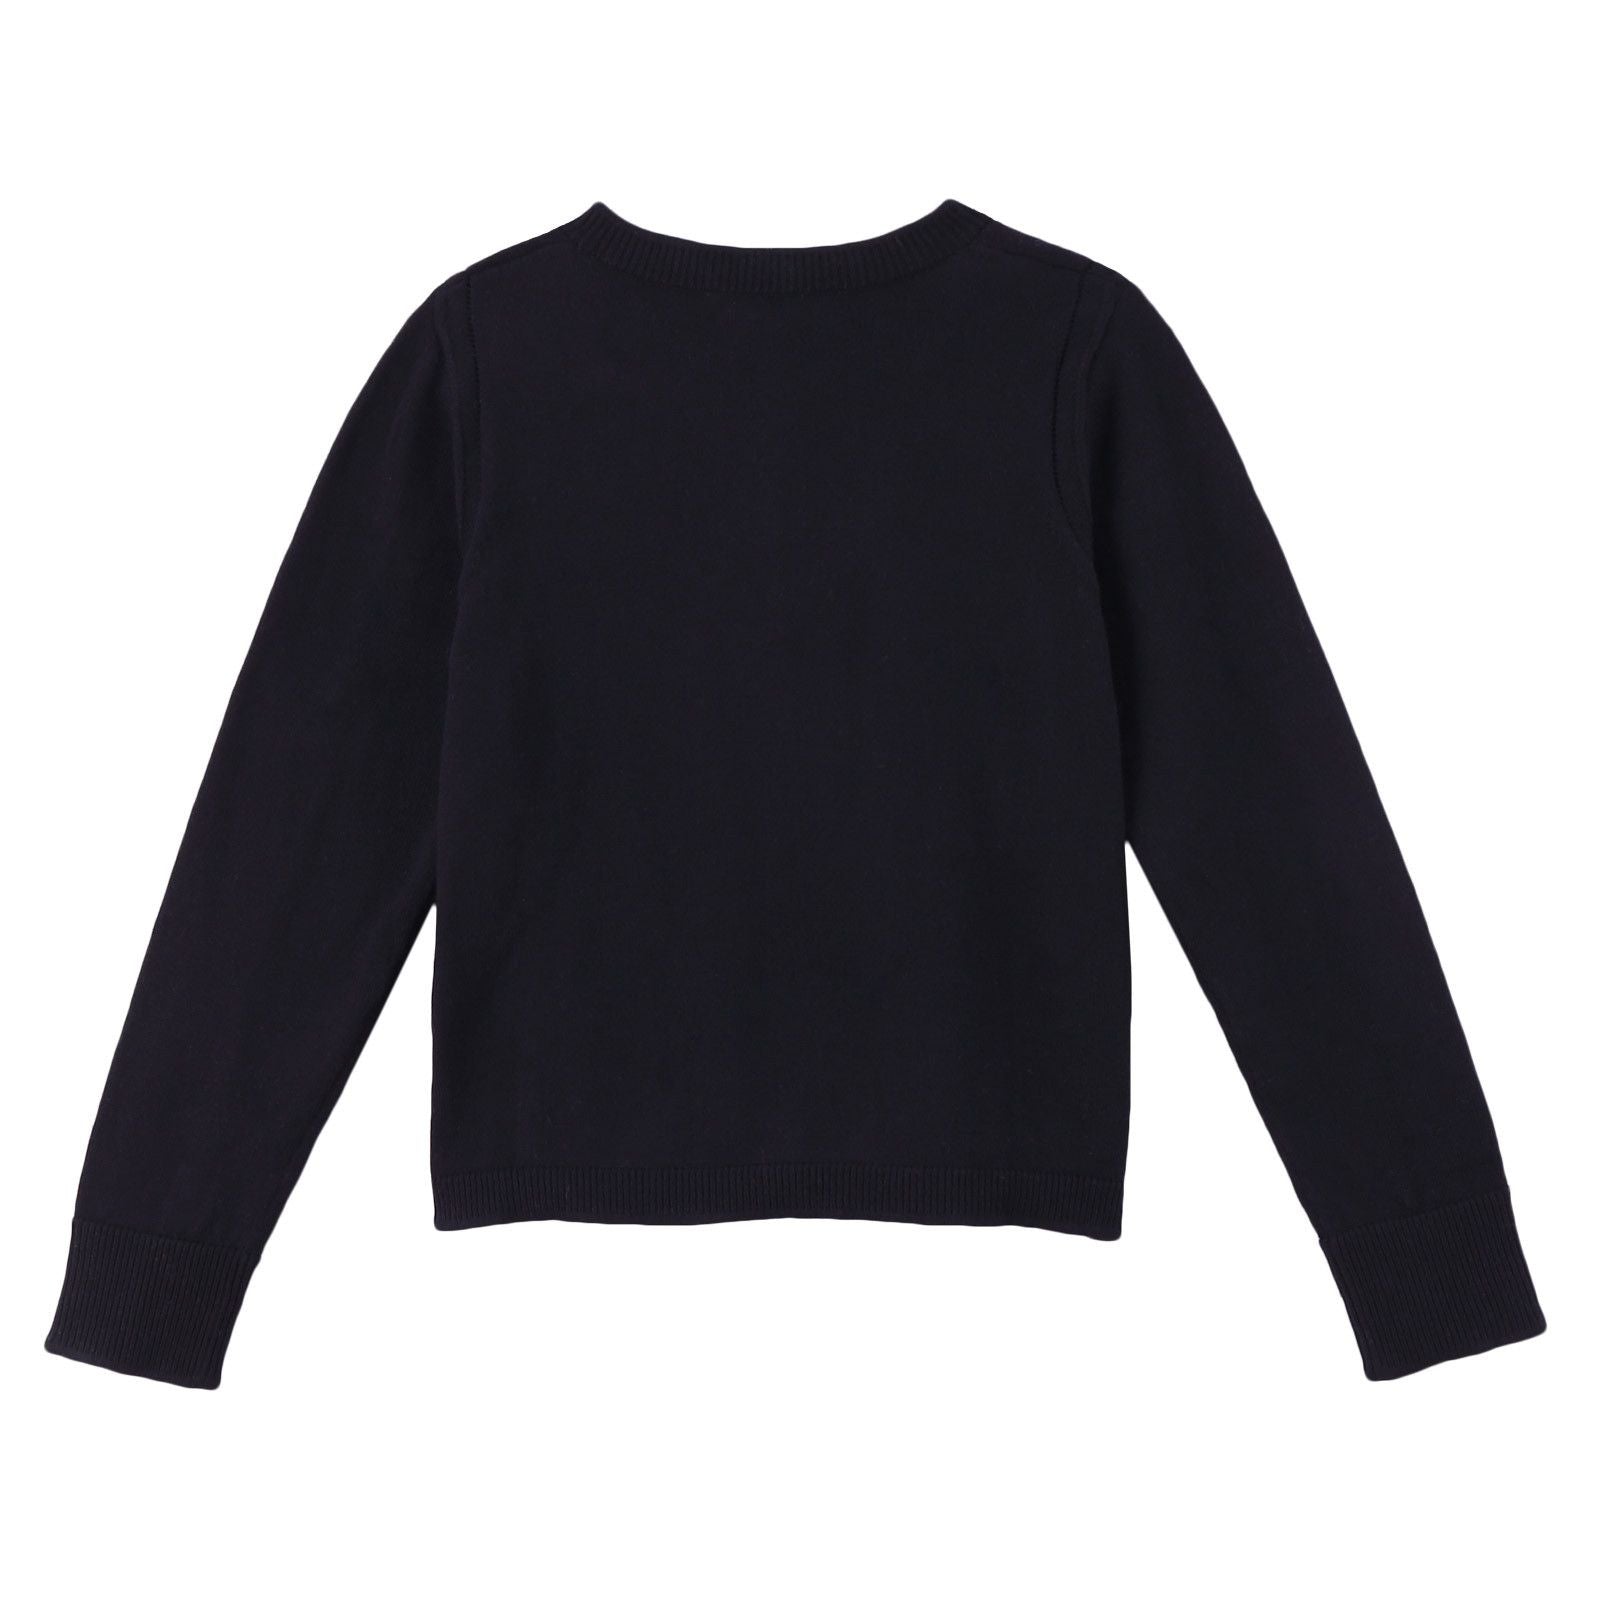 Girls Black Knitted Cotton Cardigan - CÉMAROSE | Children's Fashion Store - 2